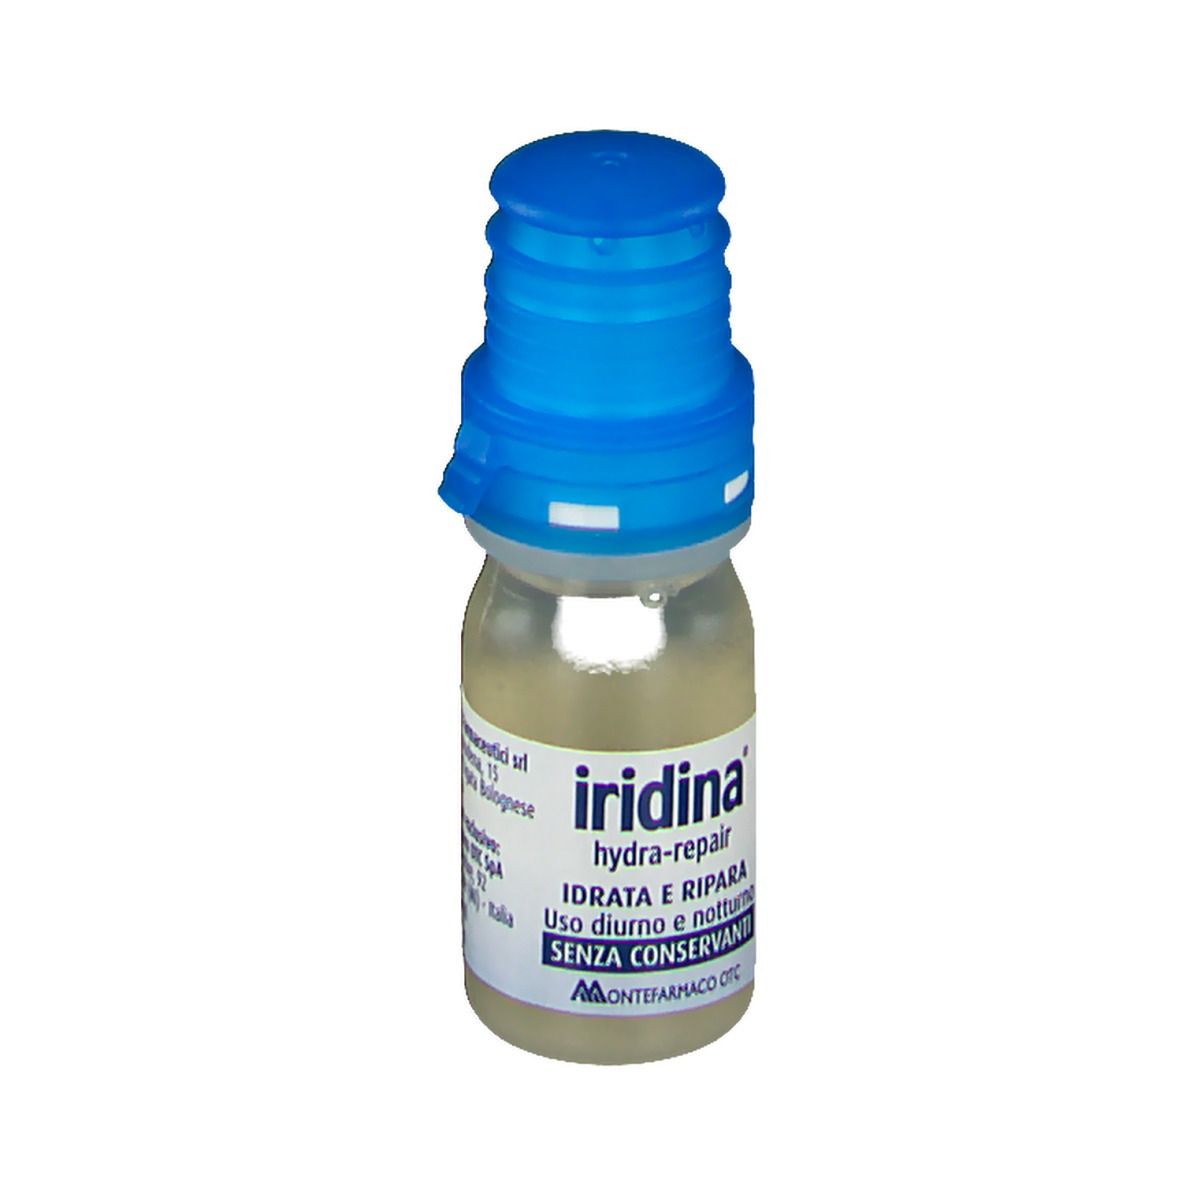 Iridina® Hydra-Repair